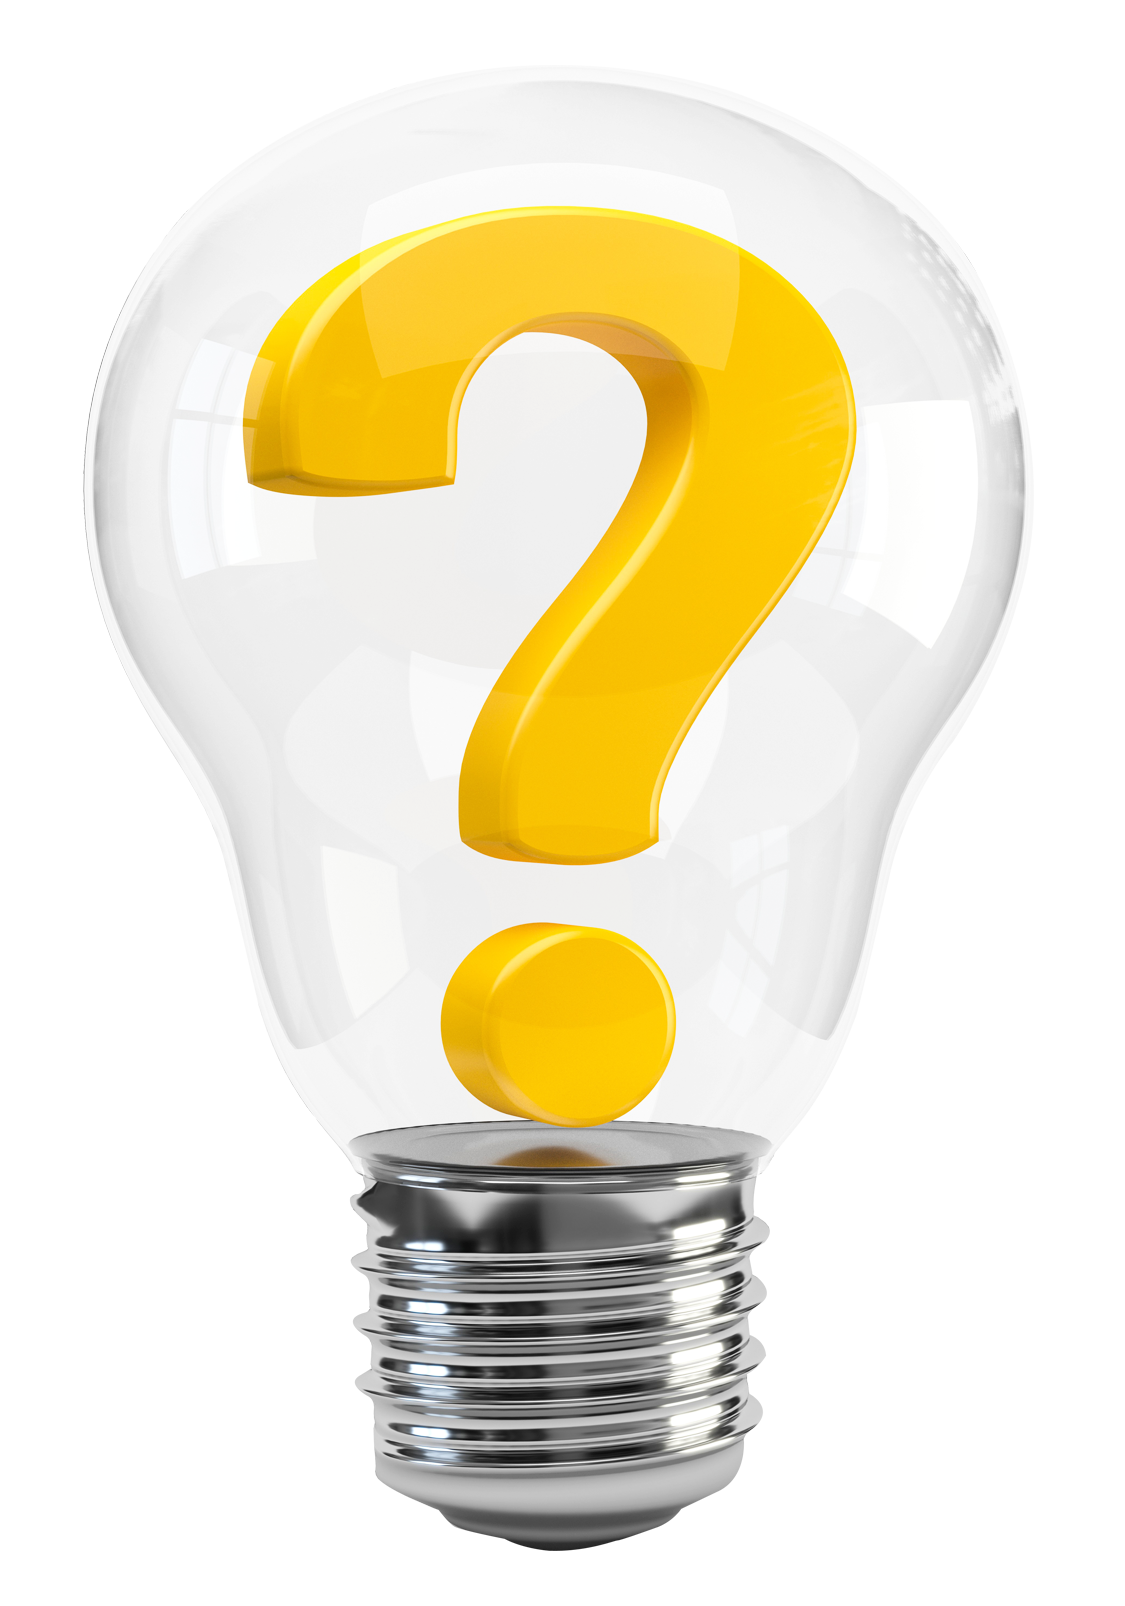 Creative clipart lightbulb. Light bulb with question